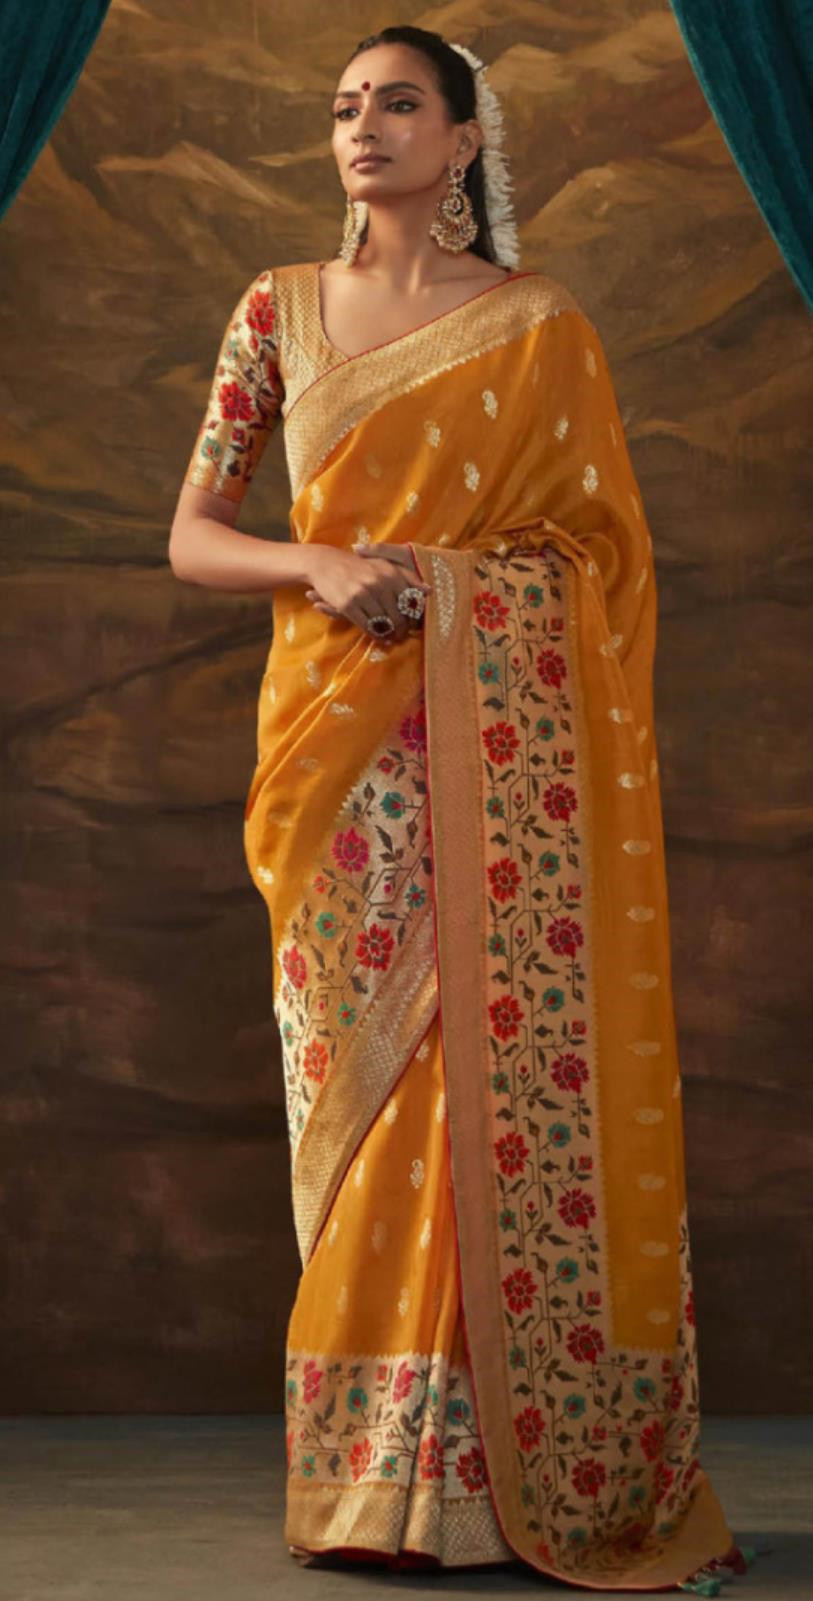 India National Orange Sari Indian Traditional Clothing Woman Festive Dress